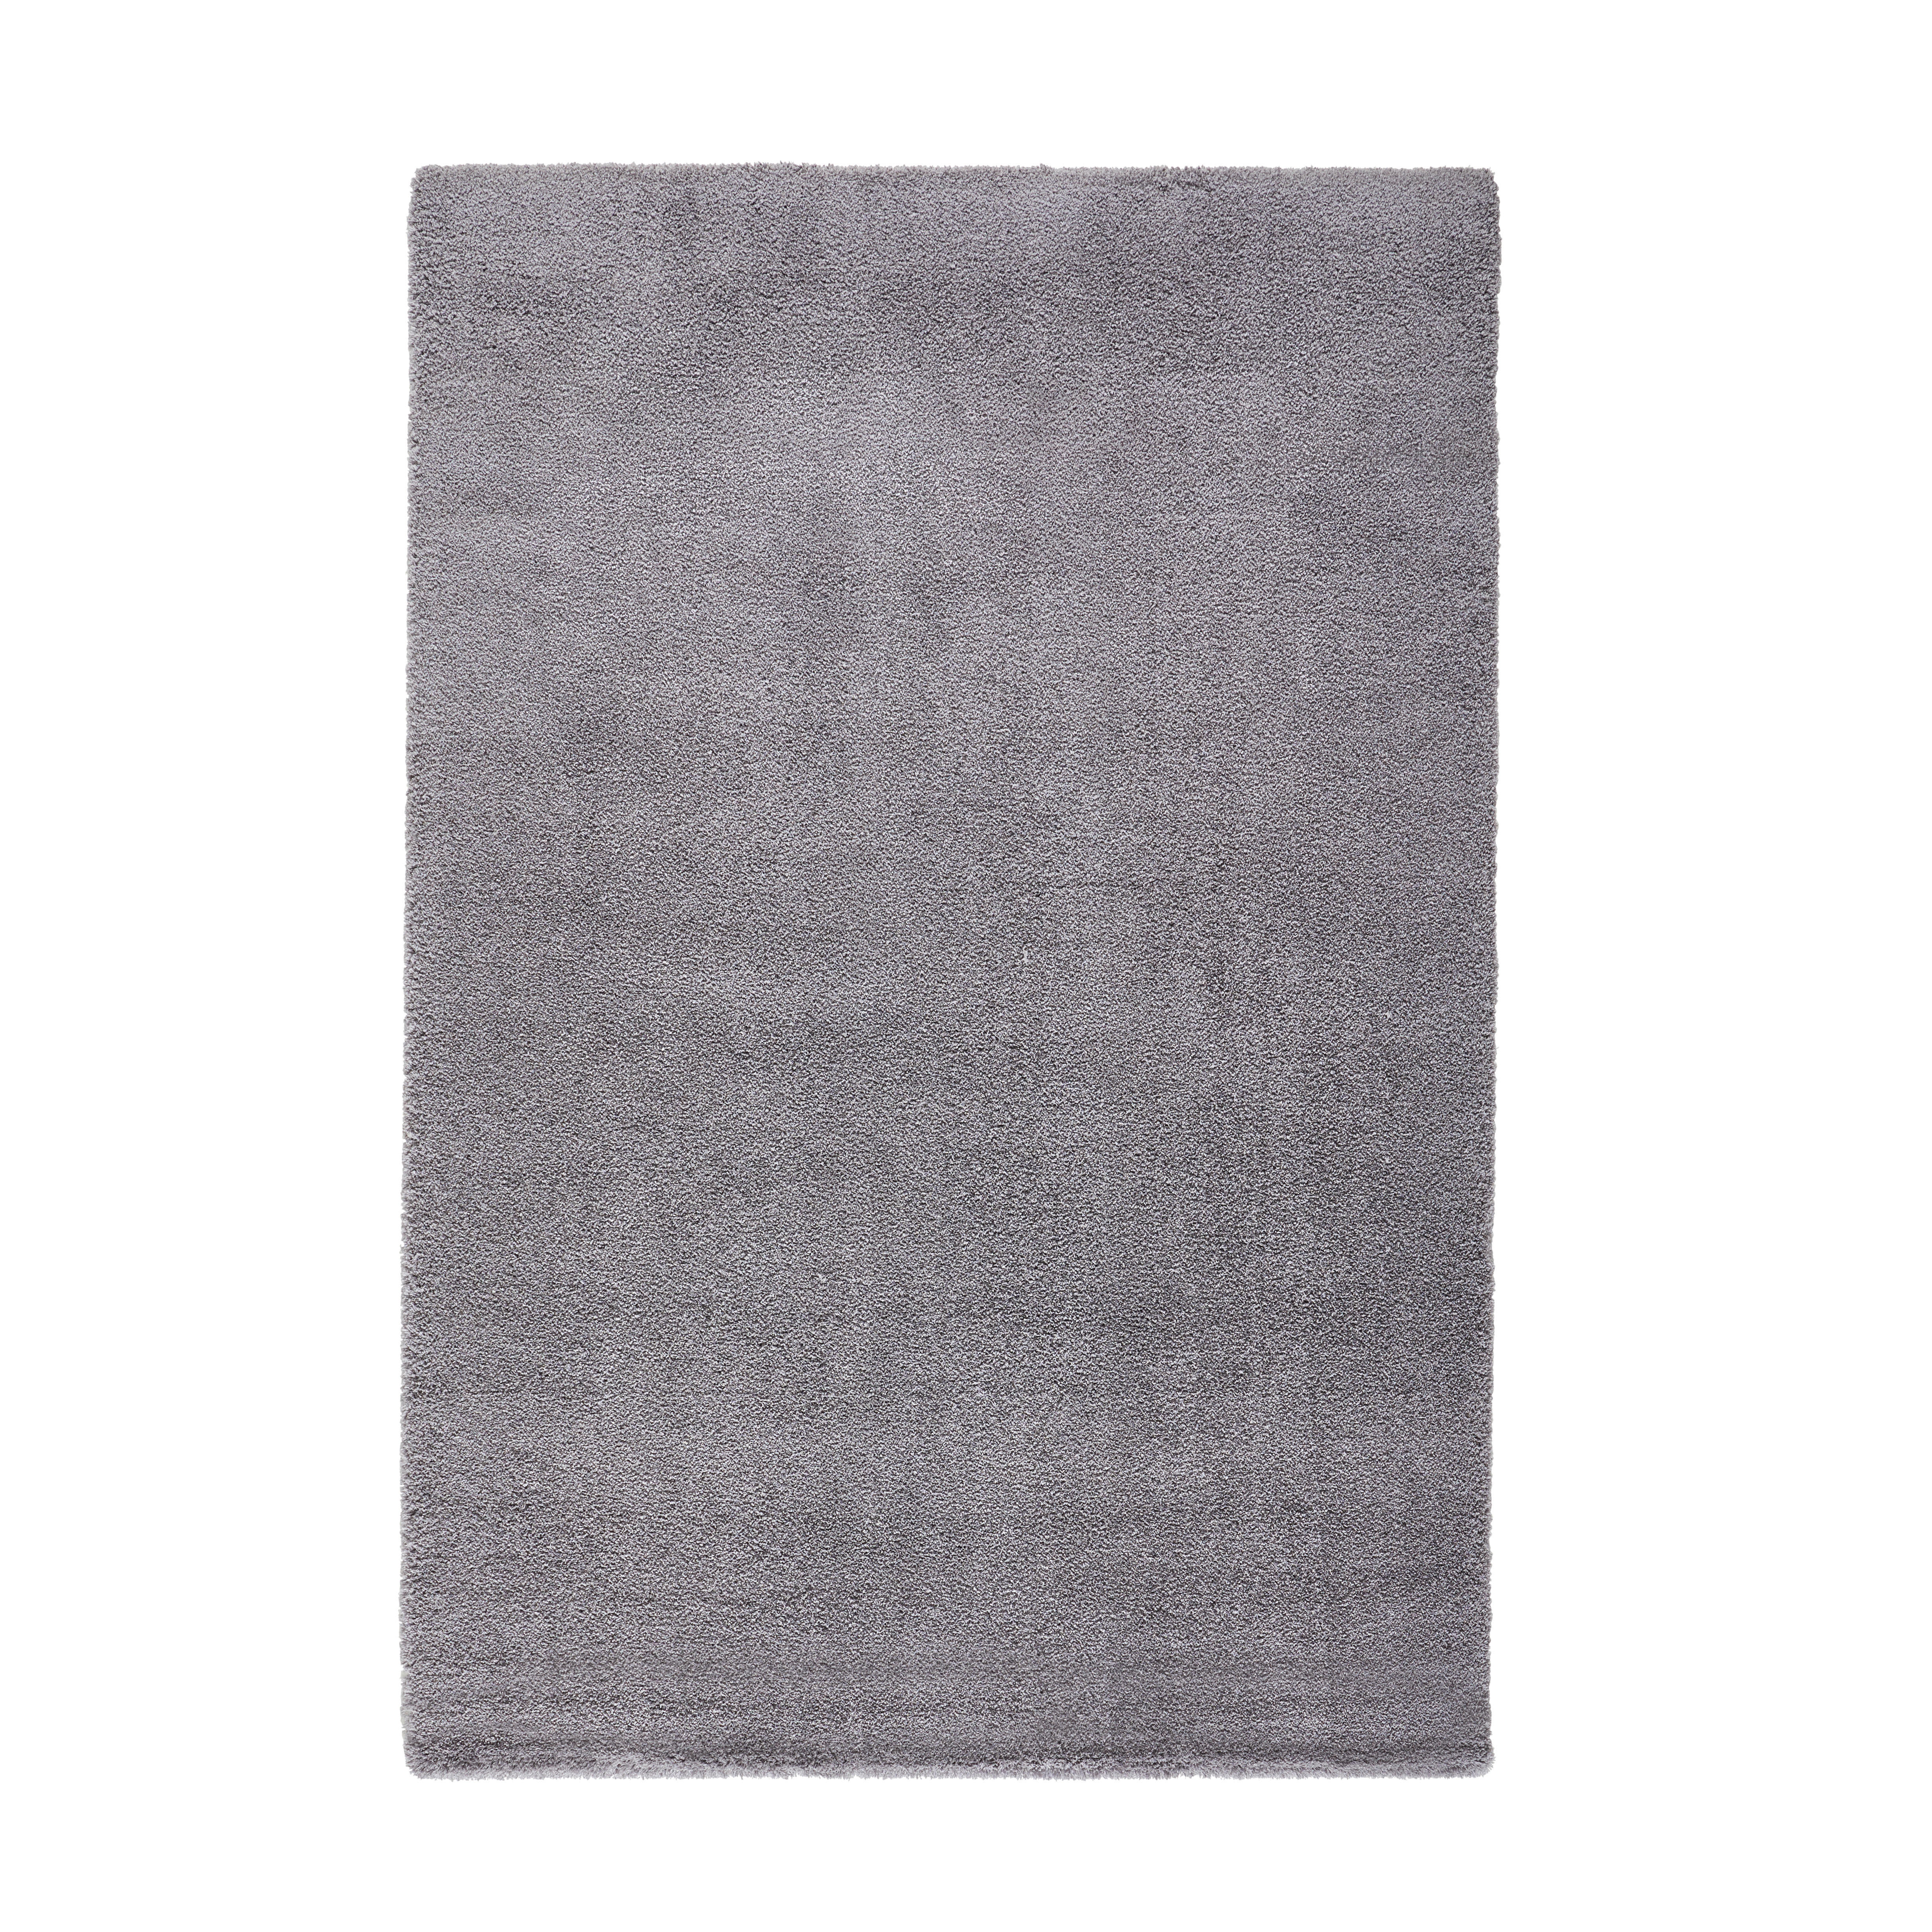 HOCHFLORTEPPICH 160/230 cm  - Dunkelgrau, Basics, Textil (160/230cm) - Novel